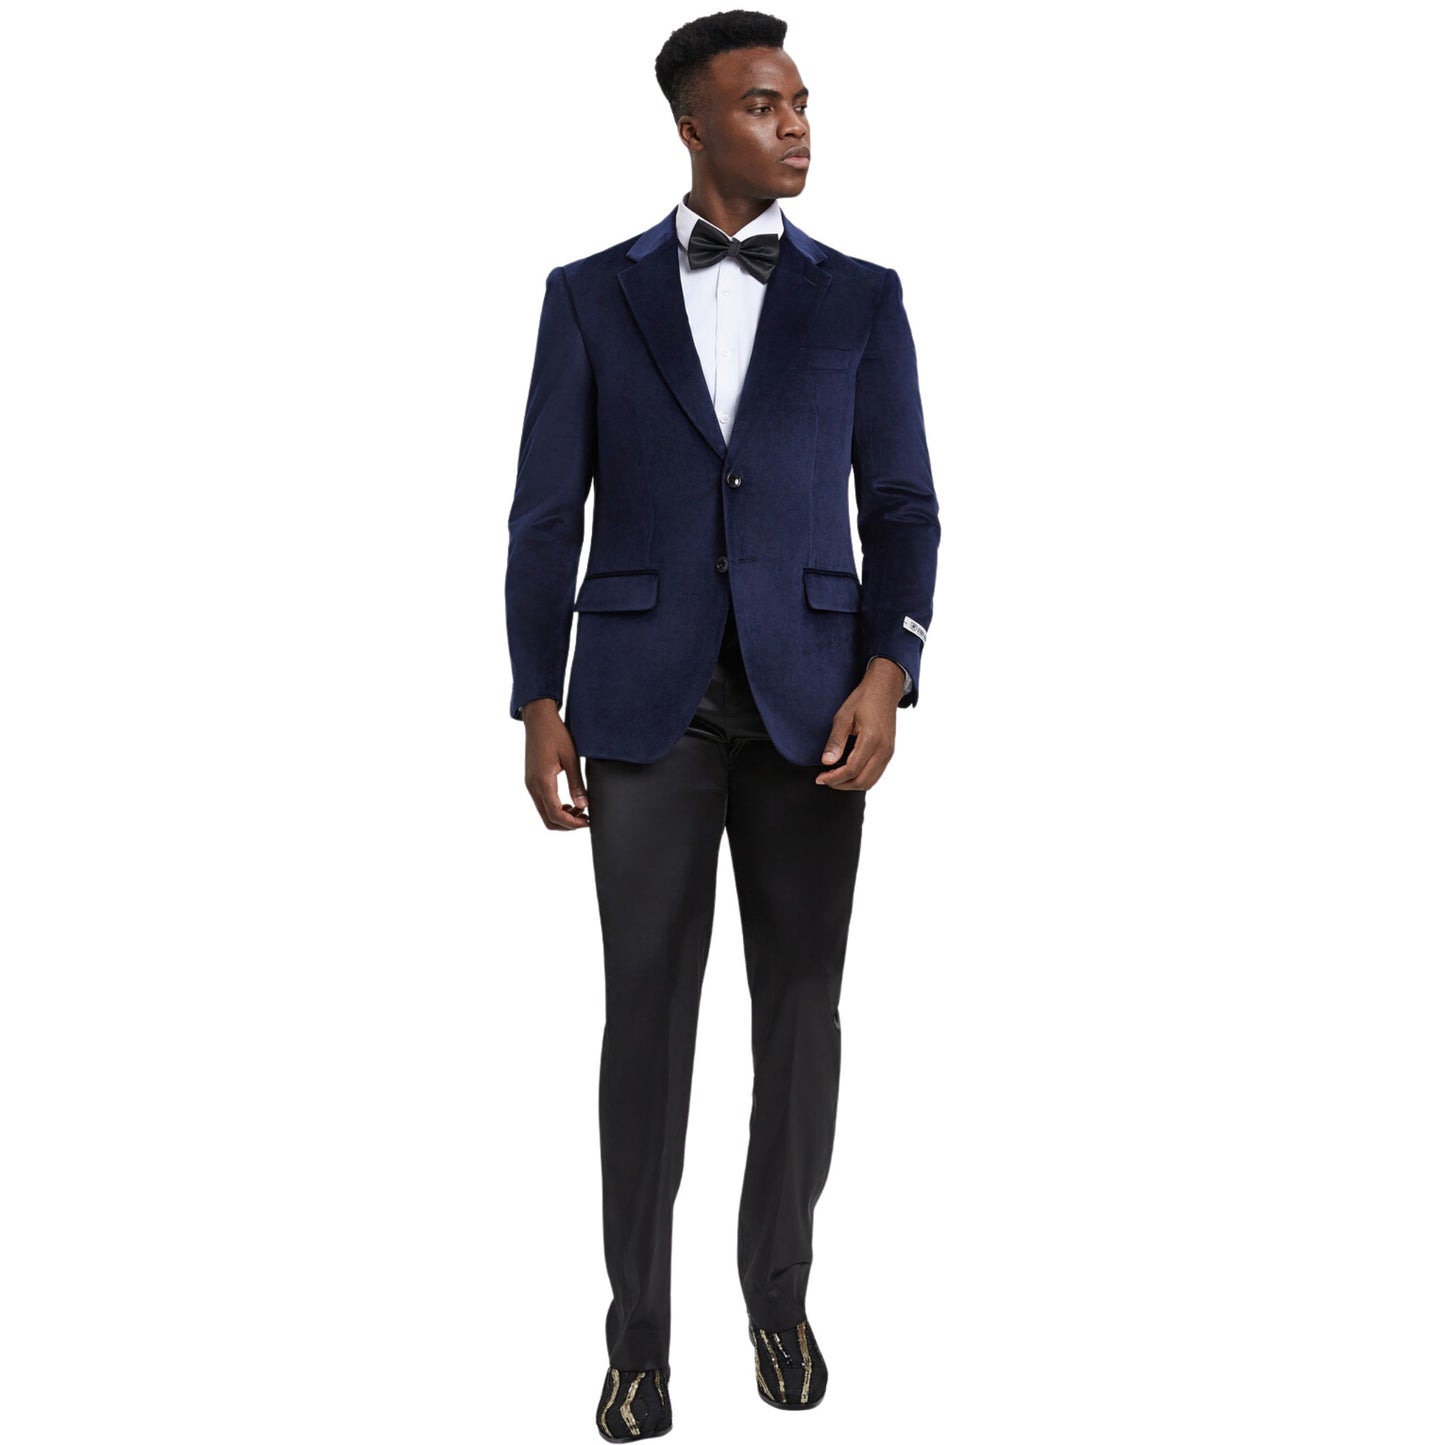 Men's navy blue velvet blazer for proms, weddings, and special occasions.